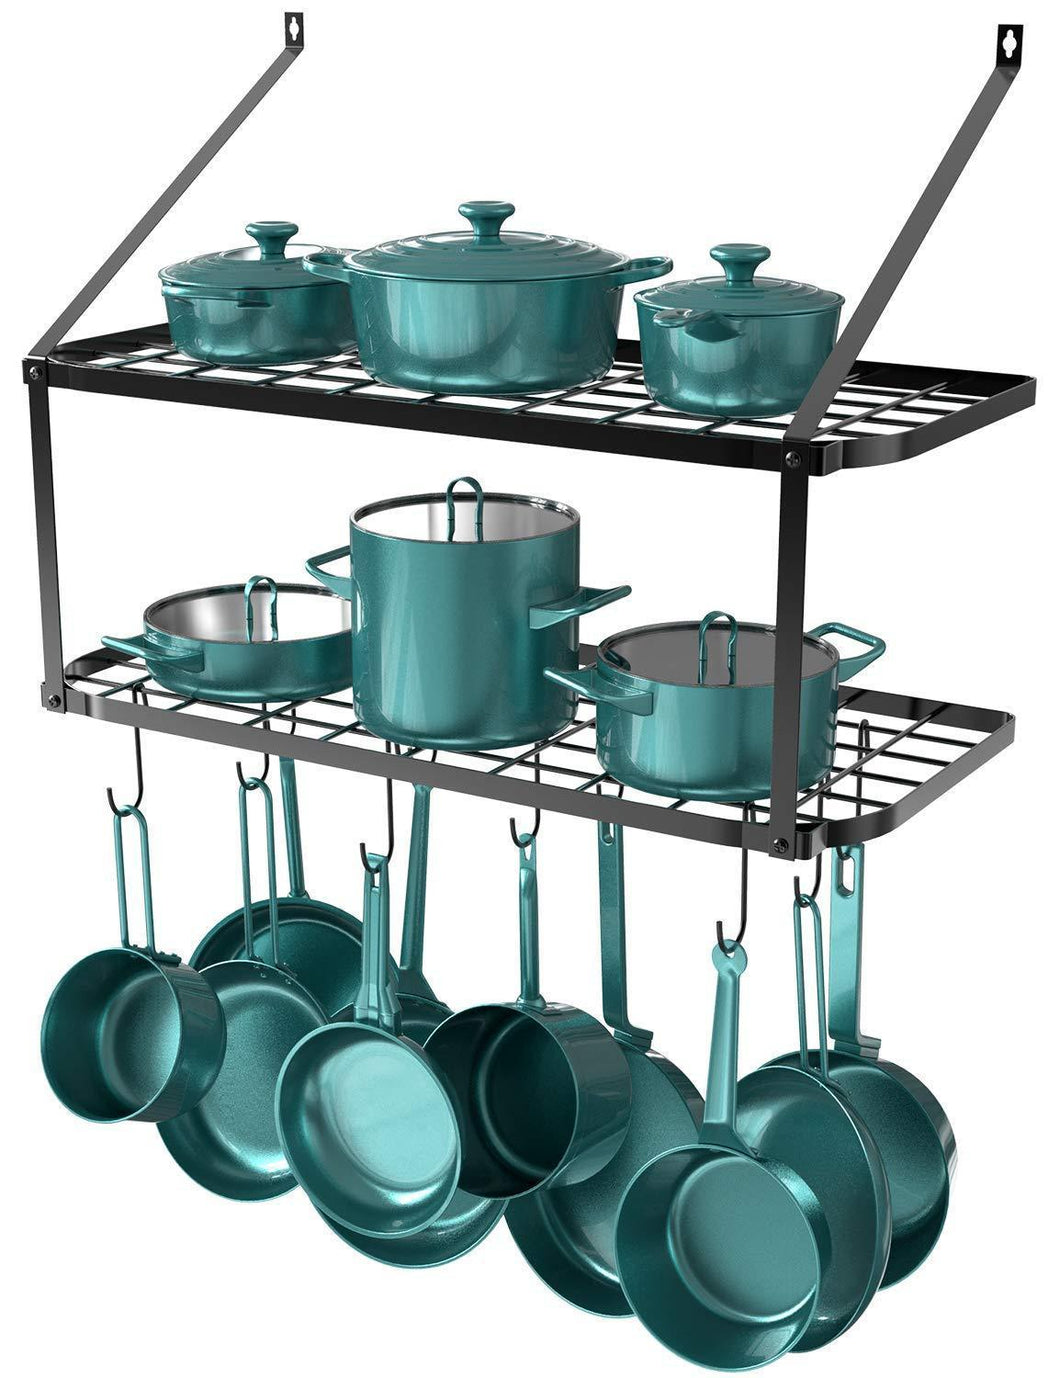 New geekdigg 29 5 inch wall mounted pot rack storage shelf with 2 tier 10 hooks included kitchen pot racks hanging storage organizer black